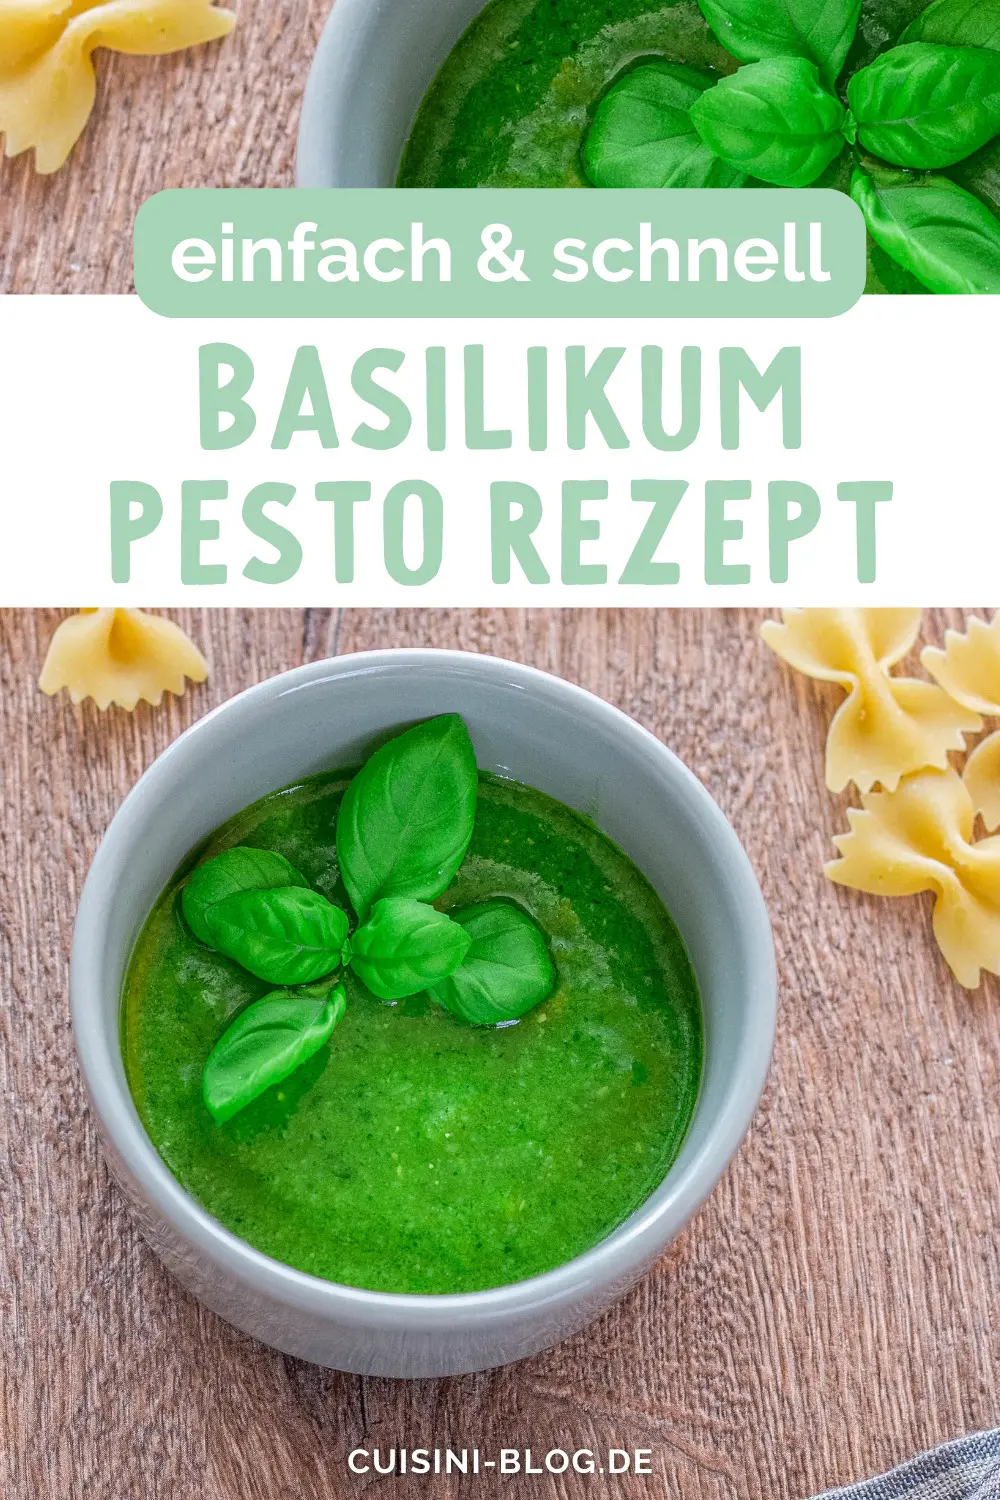 Basilikum Pesto Rezept selber machen. Einfaches Grünes Pesto oder auch Pesto alla Genovese.